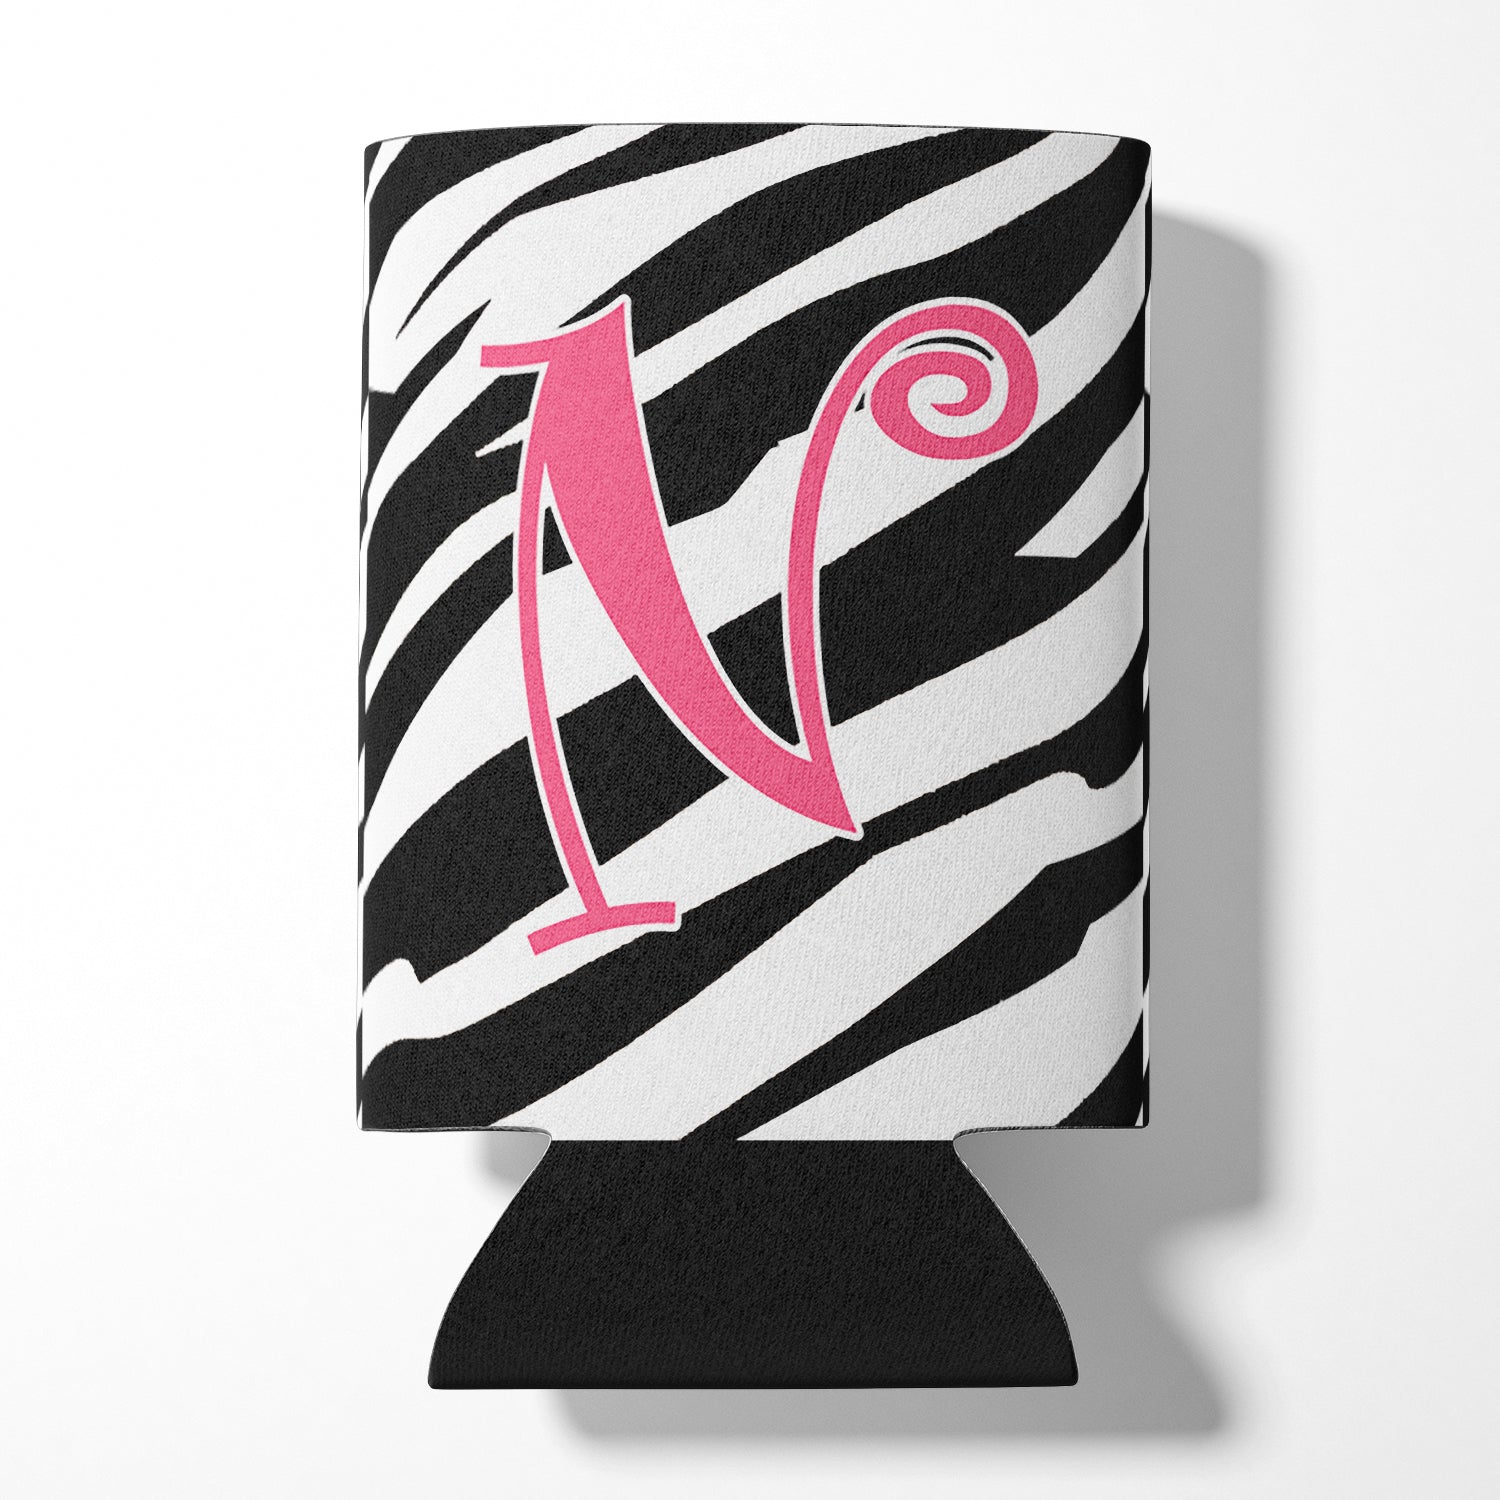 Lettre N Initial Monogram - Zebra Stripe et Pink Can or Bottle Beverage Insulator Hugger